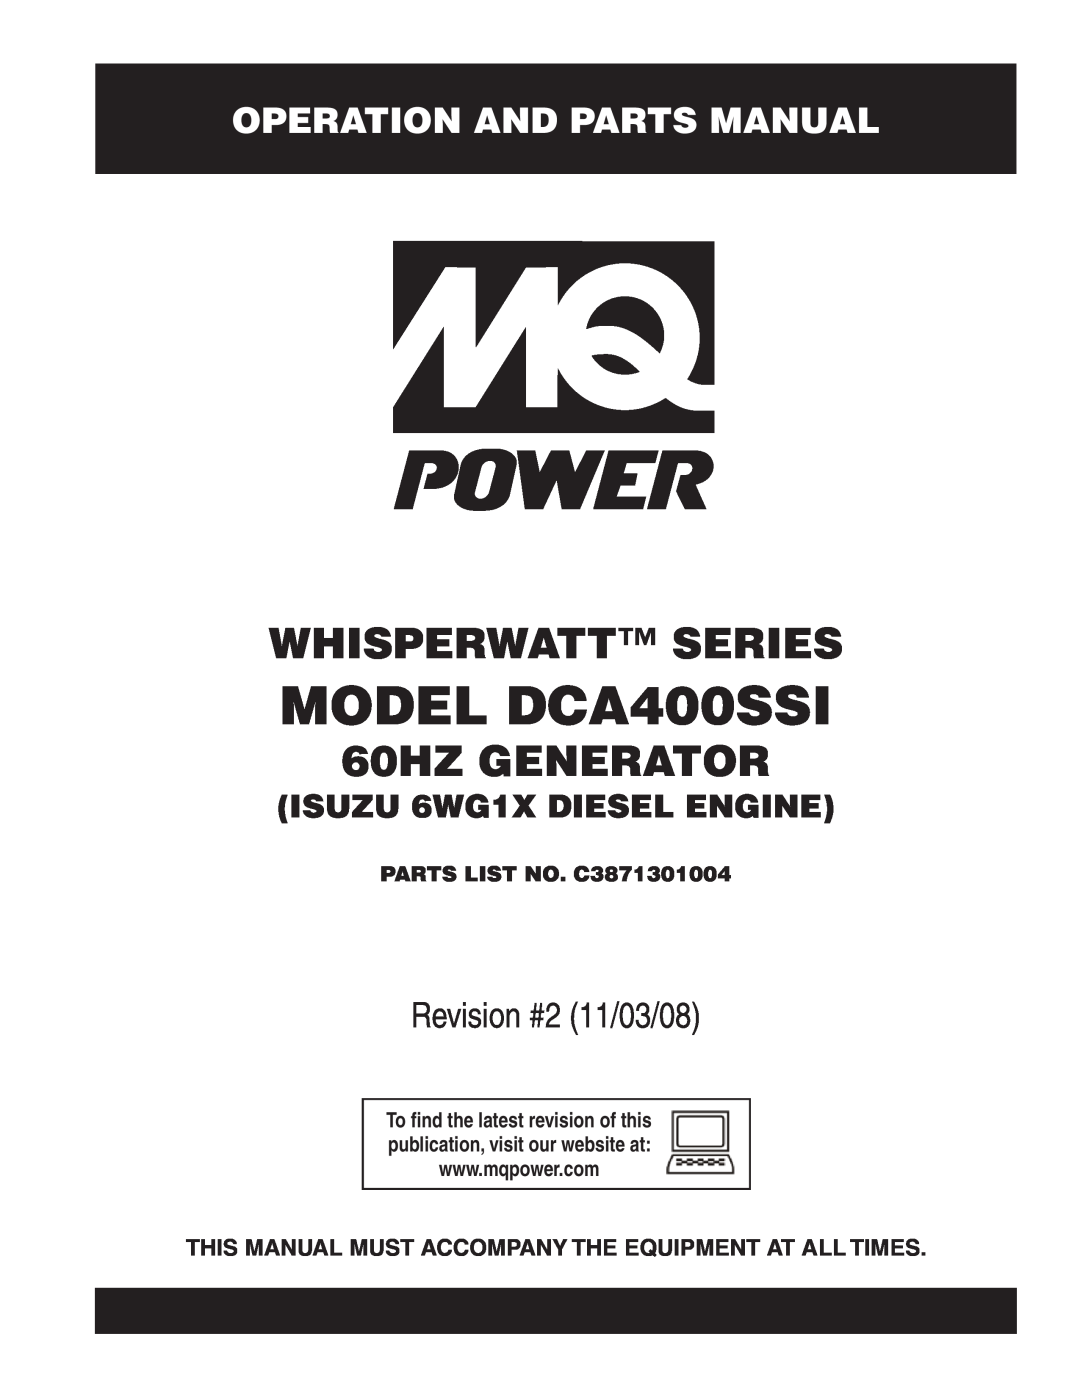 Multiquip manual Operation And Parts Manual, PARTS LIST NO. C3871301004, MODEL DCA400SSI, Whisperwatt Series 